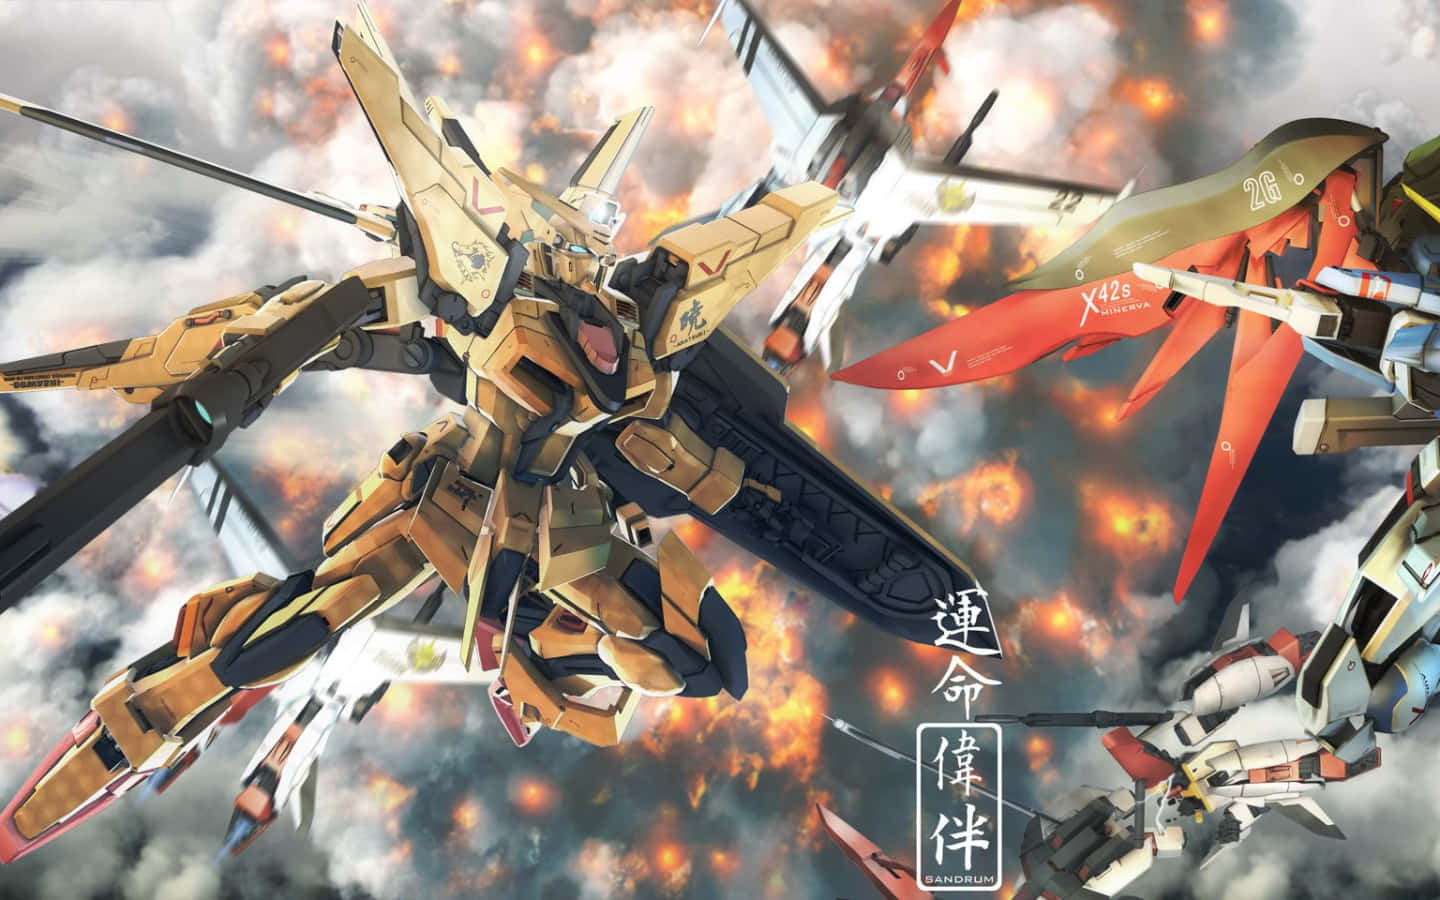 Get ready for Gundam battles with this custom Gundam Desktop wallpaper Wallpaper